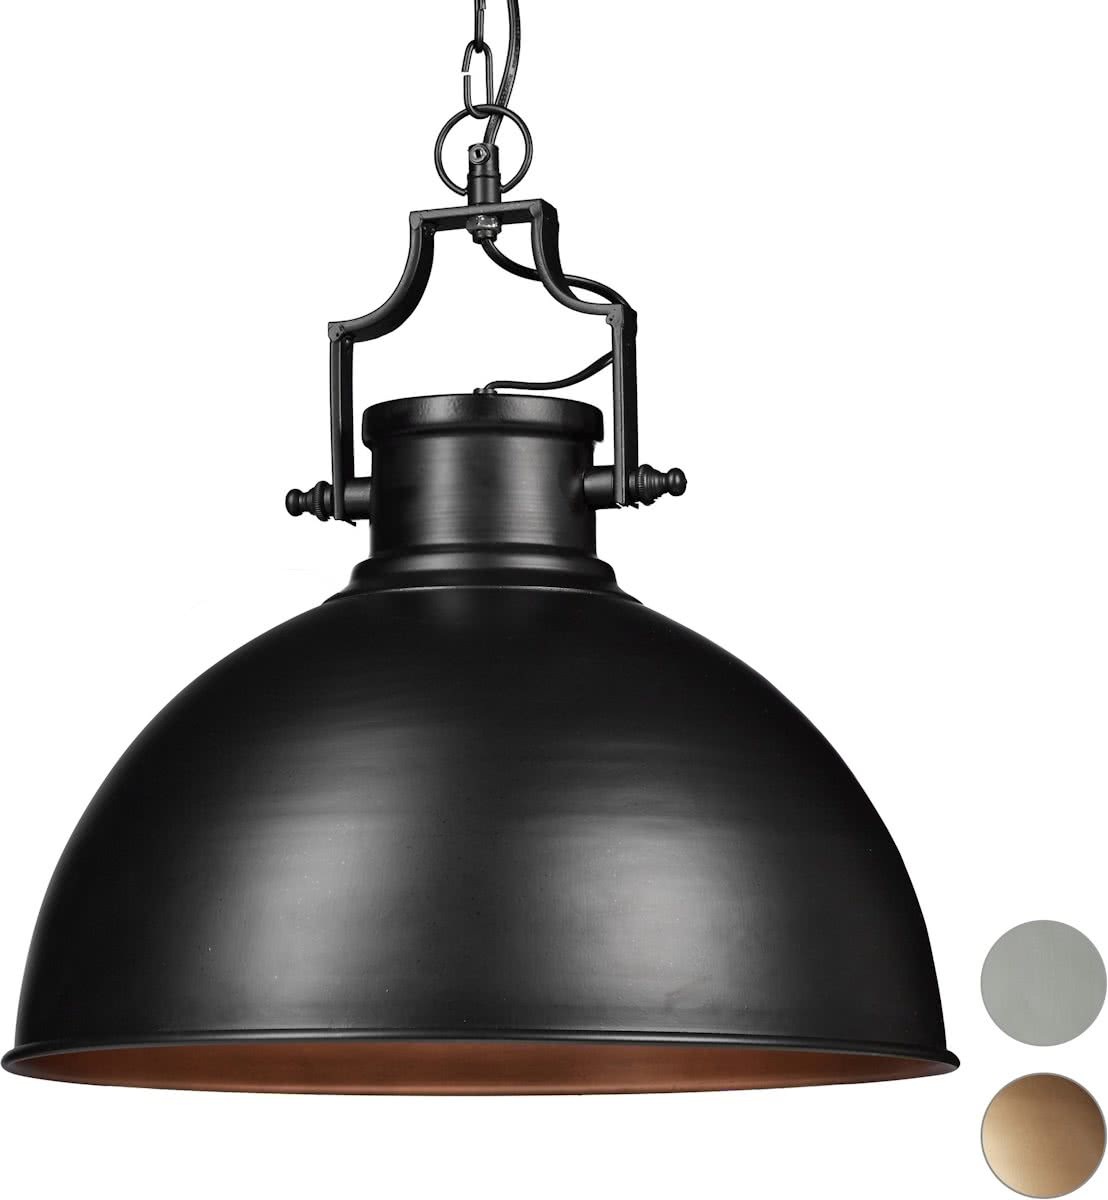 Relaxdays - hanglamp industriÃ«le stijl groot - shabby look - plafondlamp metaal goud